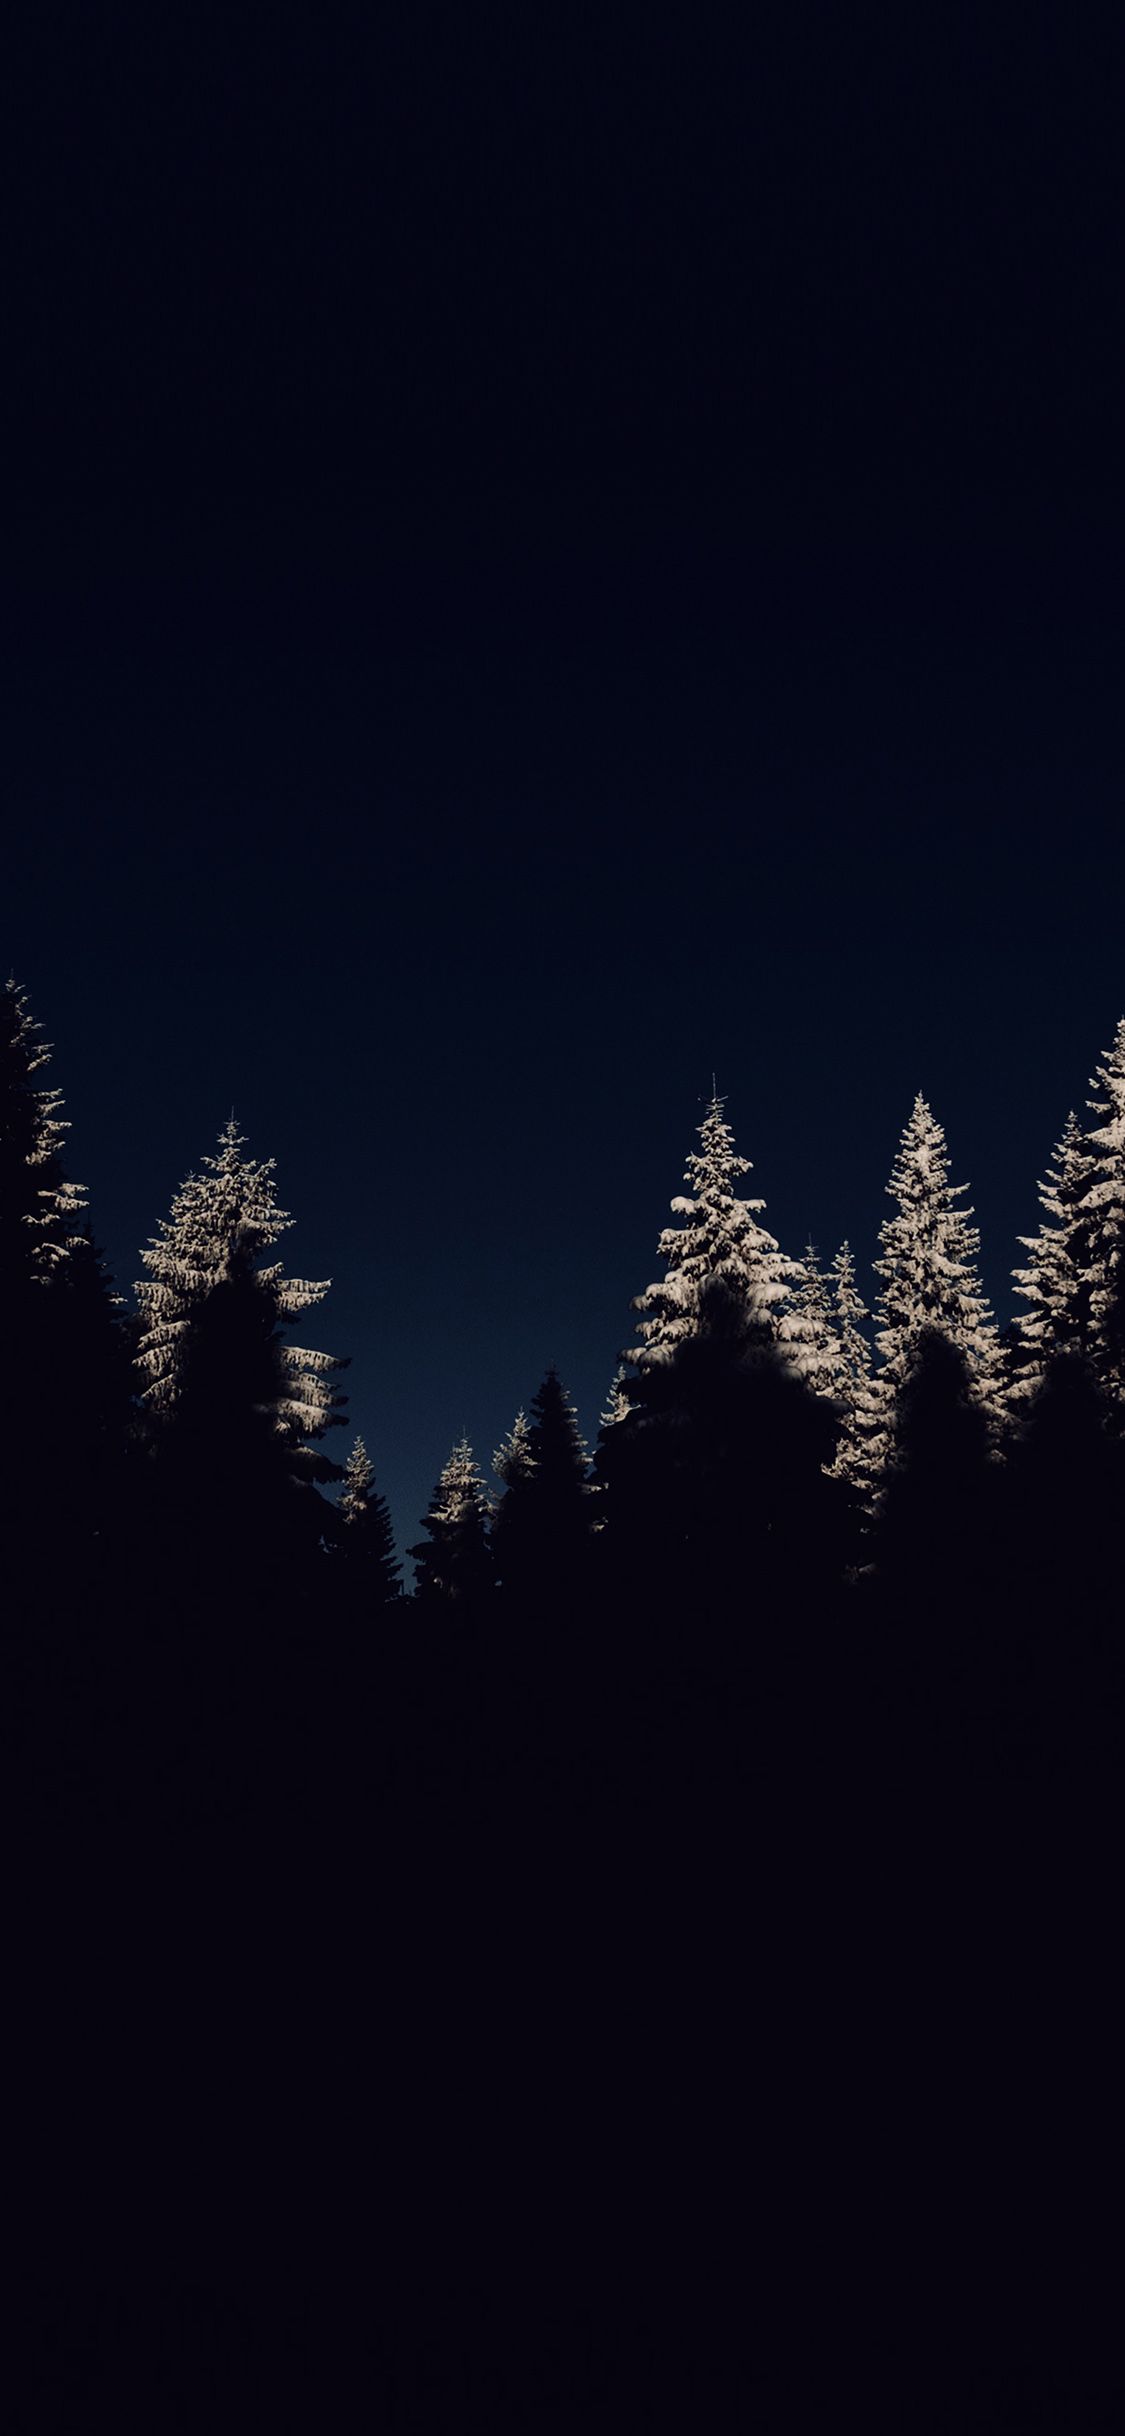 iPhone X wallpaper. wood winter night mountain dark